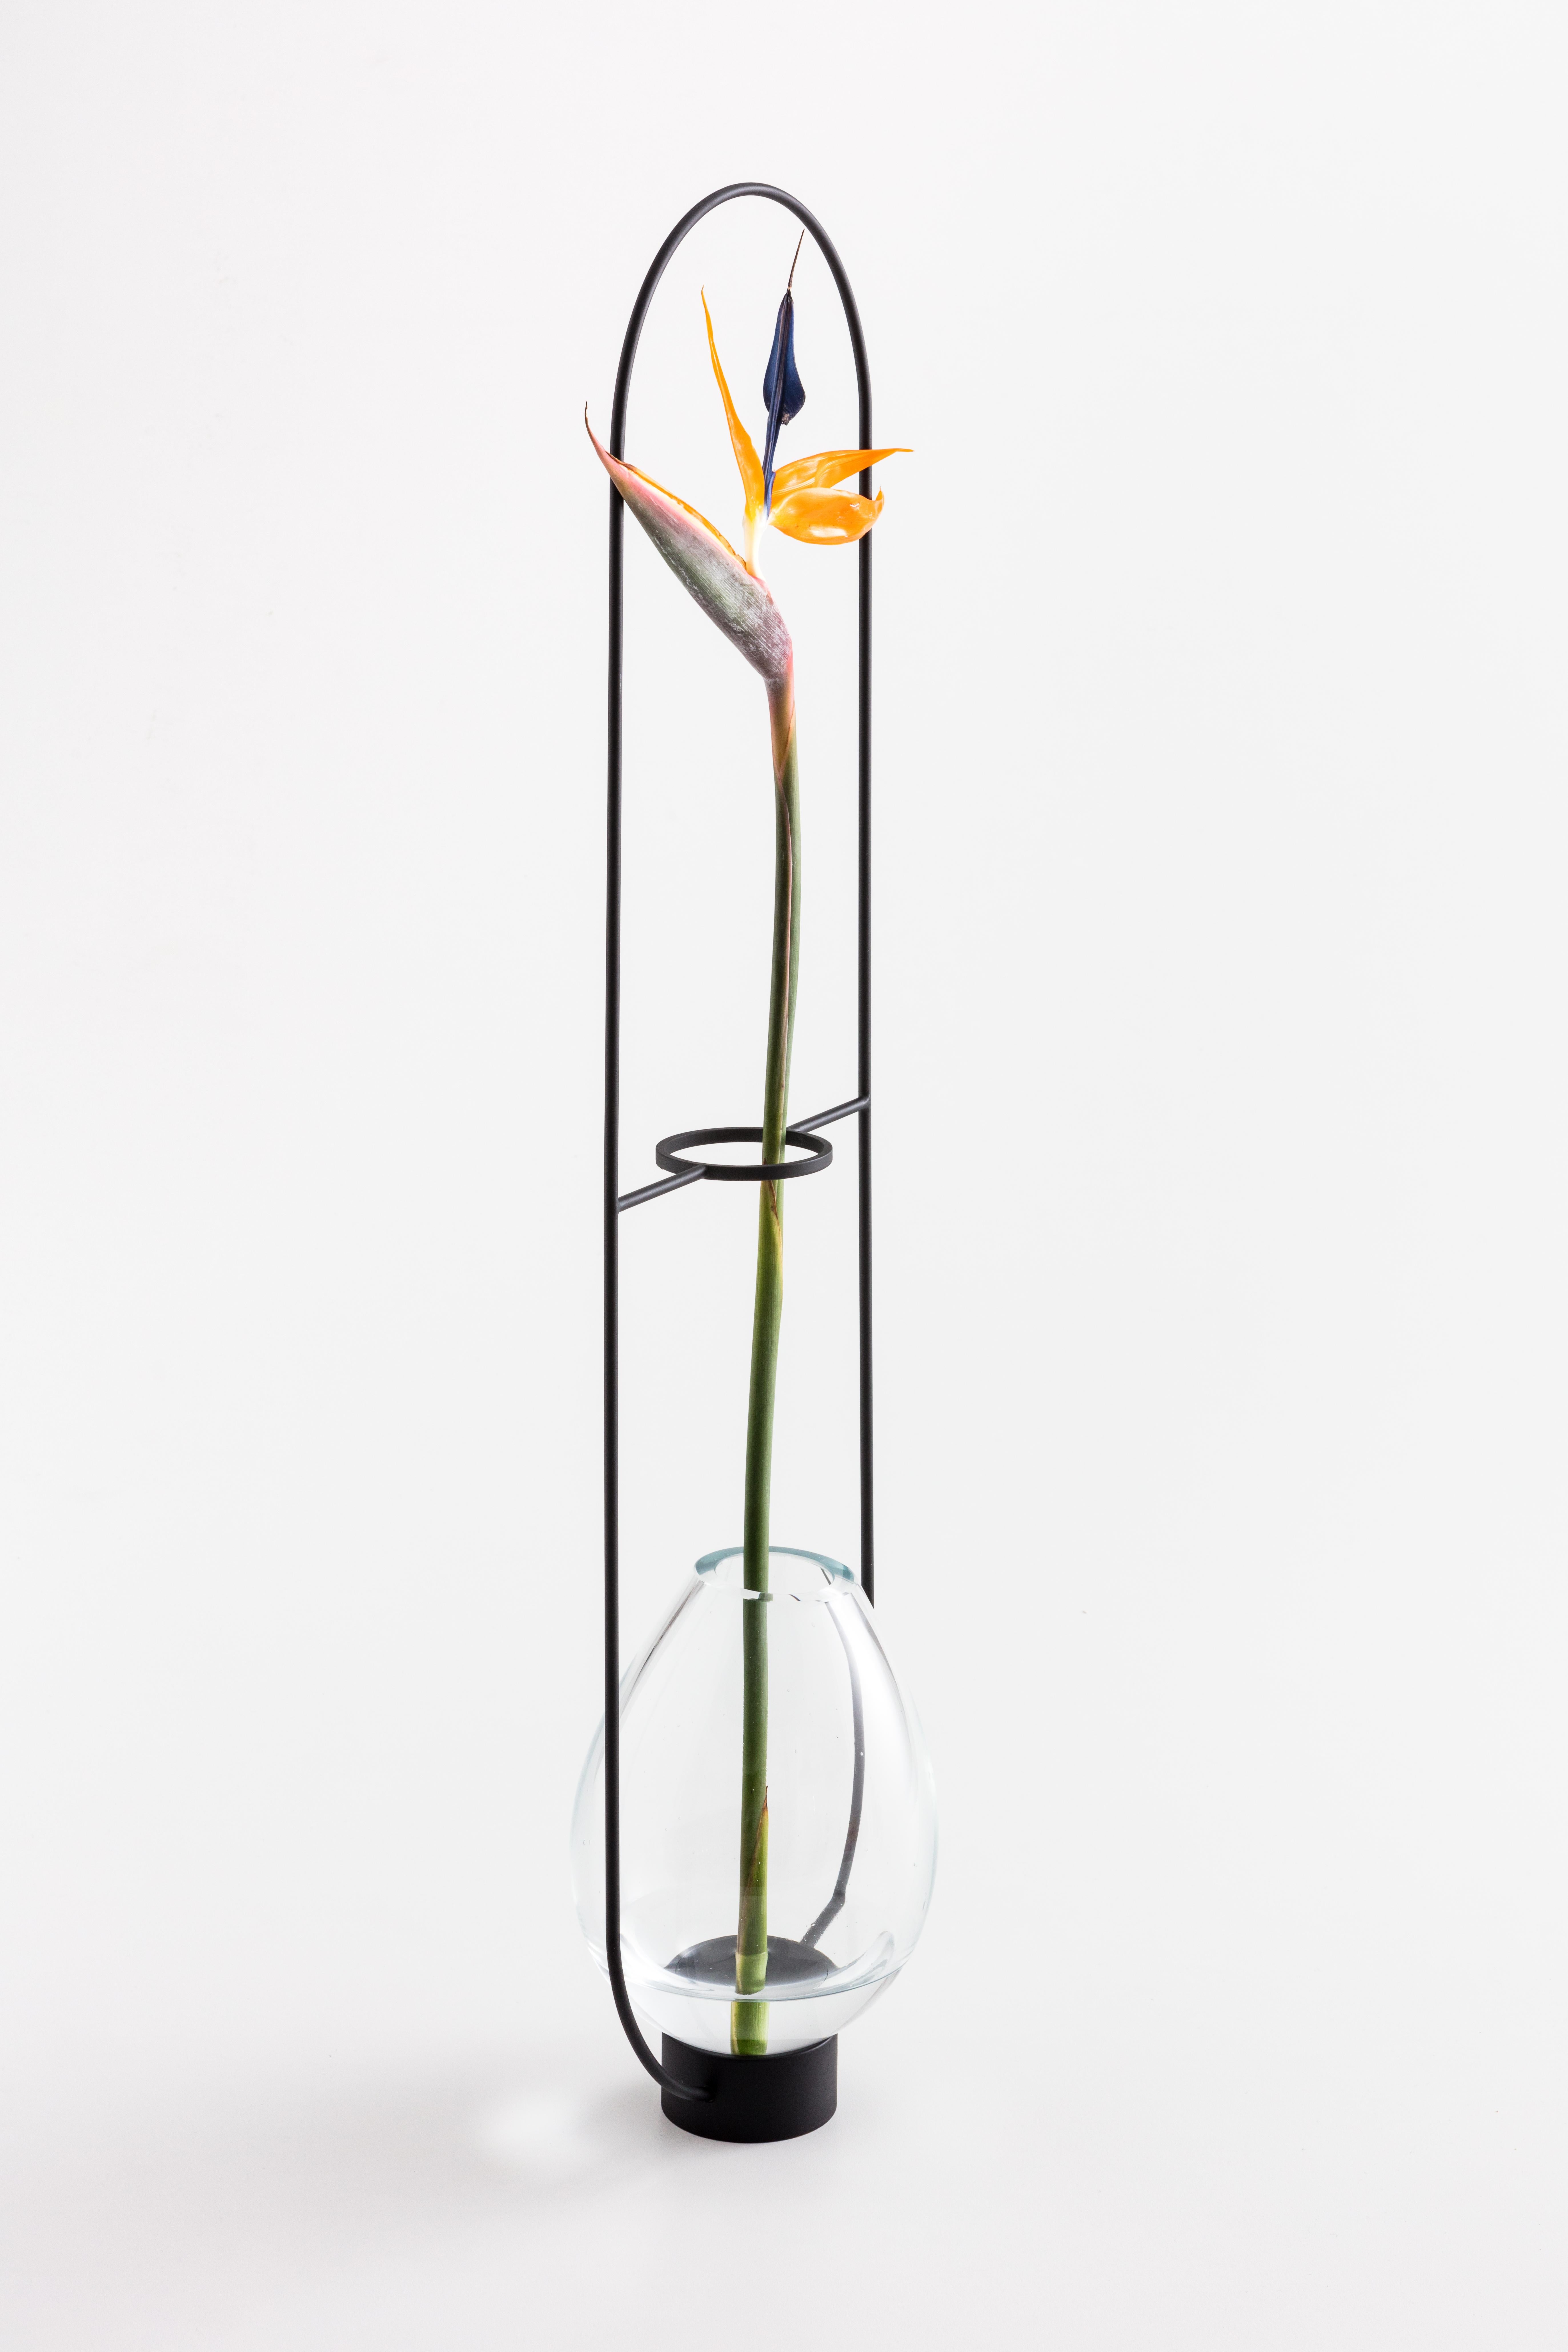 Brazilian Contemporary Minimalist Steel and Glass Solitary Vase ELO Medium For Sale